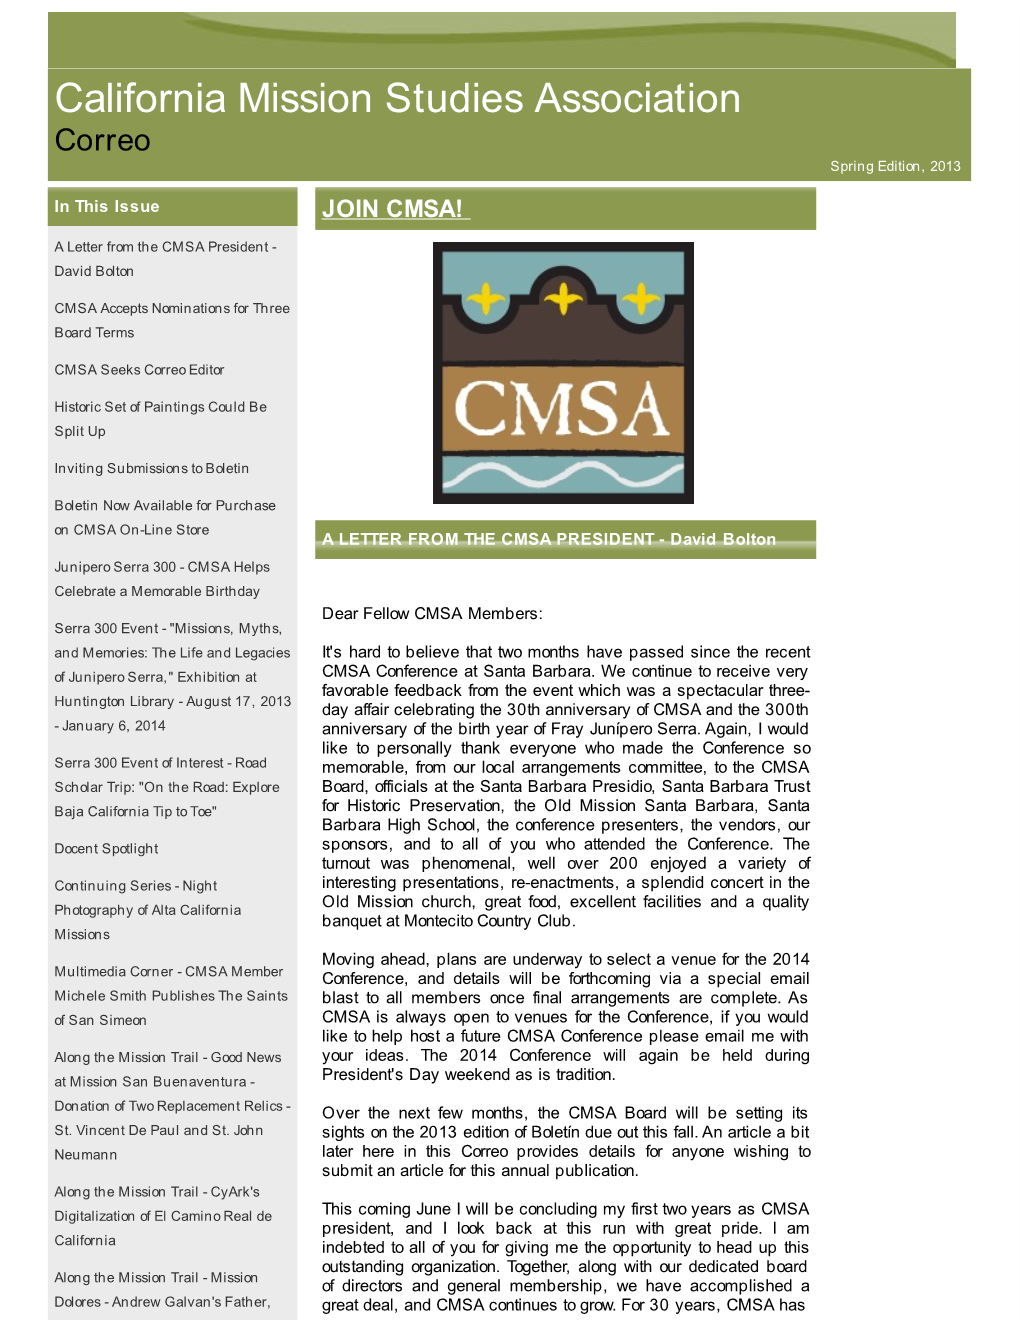 California Mission Studies Association Correo Spring Edition, 2013